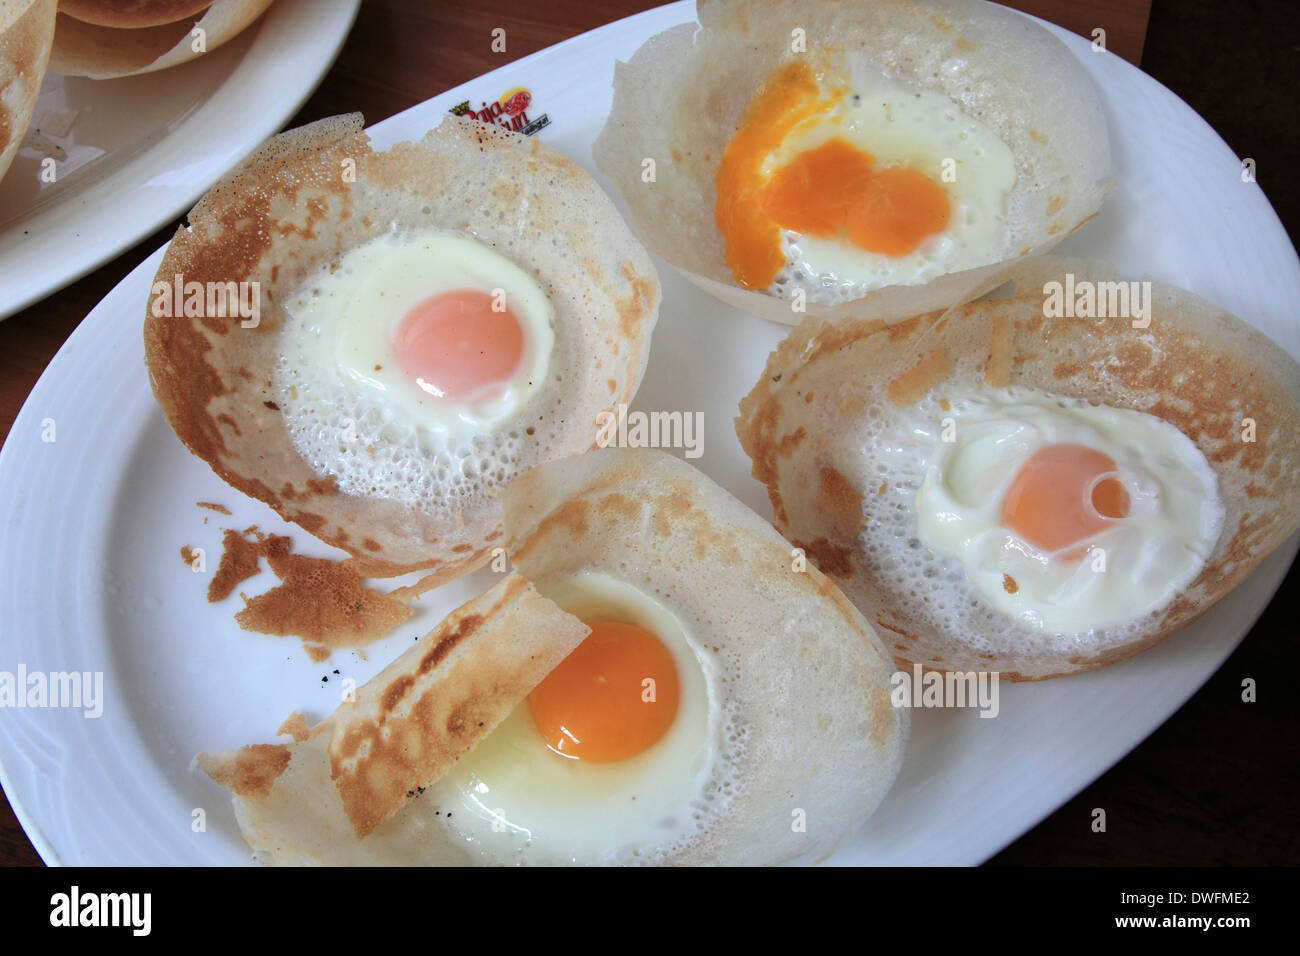 Sri Lanka; Colombo, hoppers with egg, local food, Stock Photo